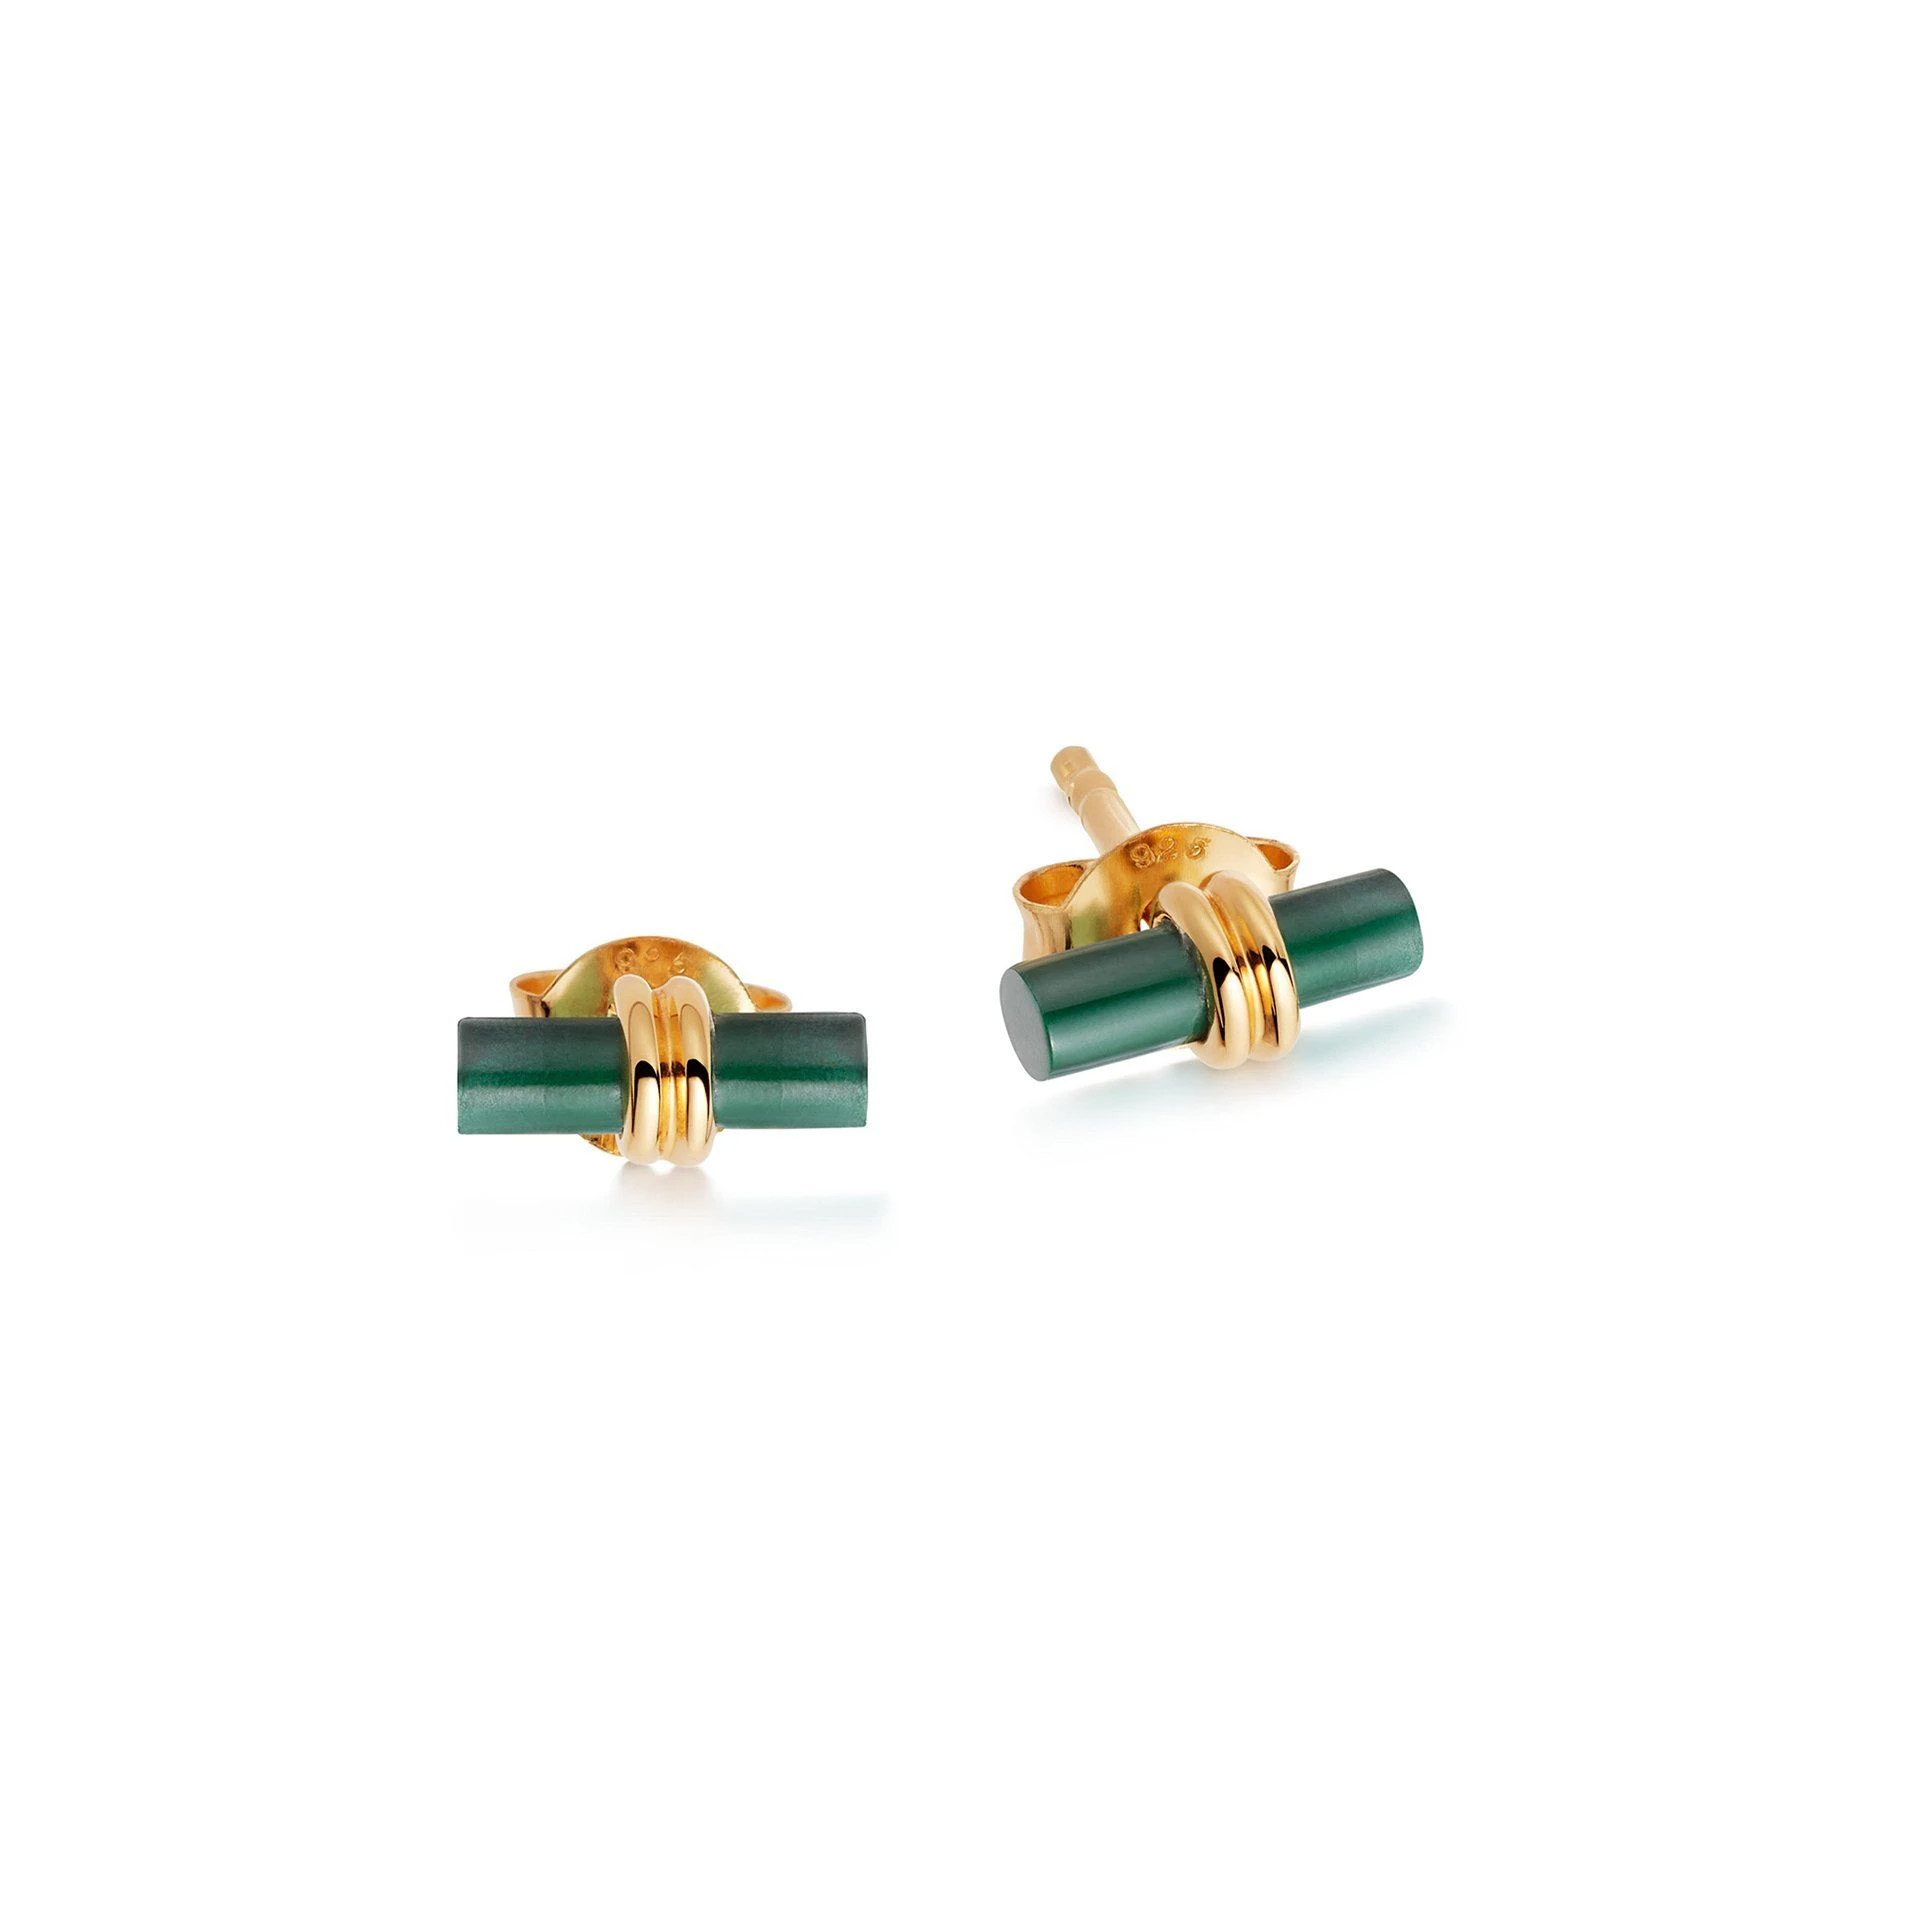 Wholesale OEM/ODM Jewelry Design custom Earrings studs green Malachite stone in 18ct gold vermeil sterling silver oem service